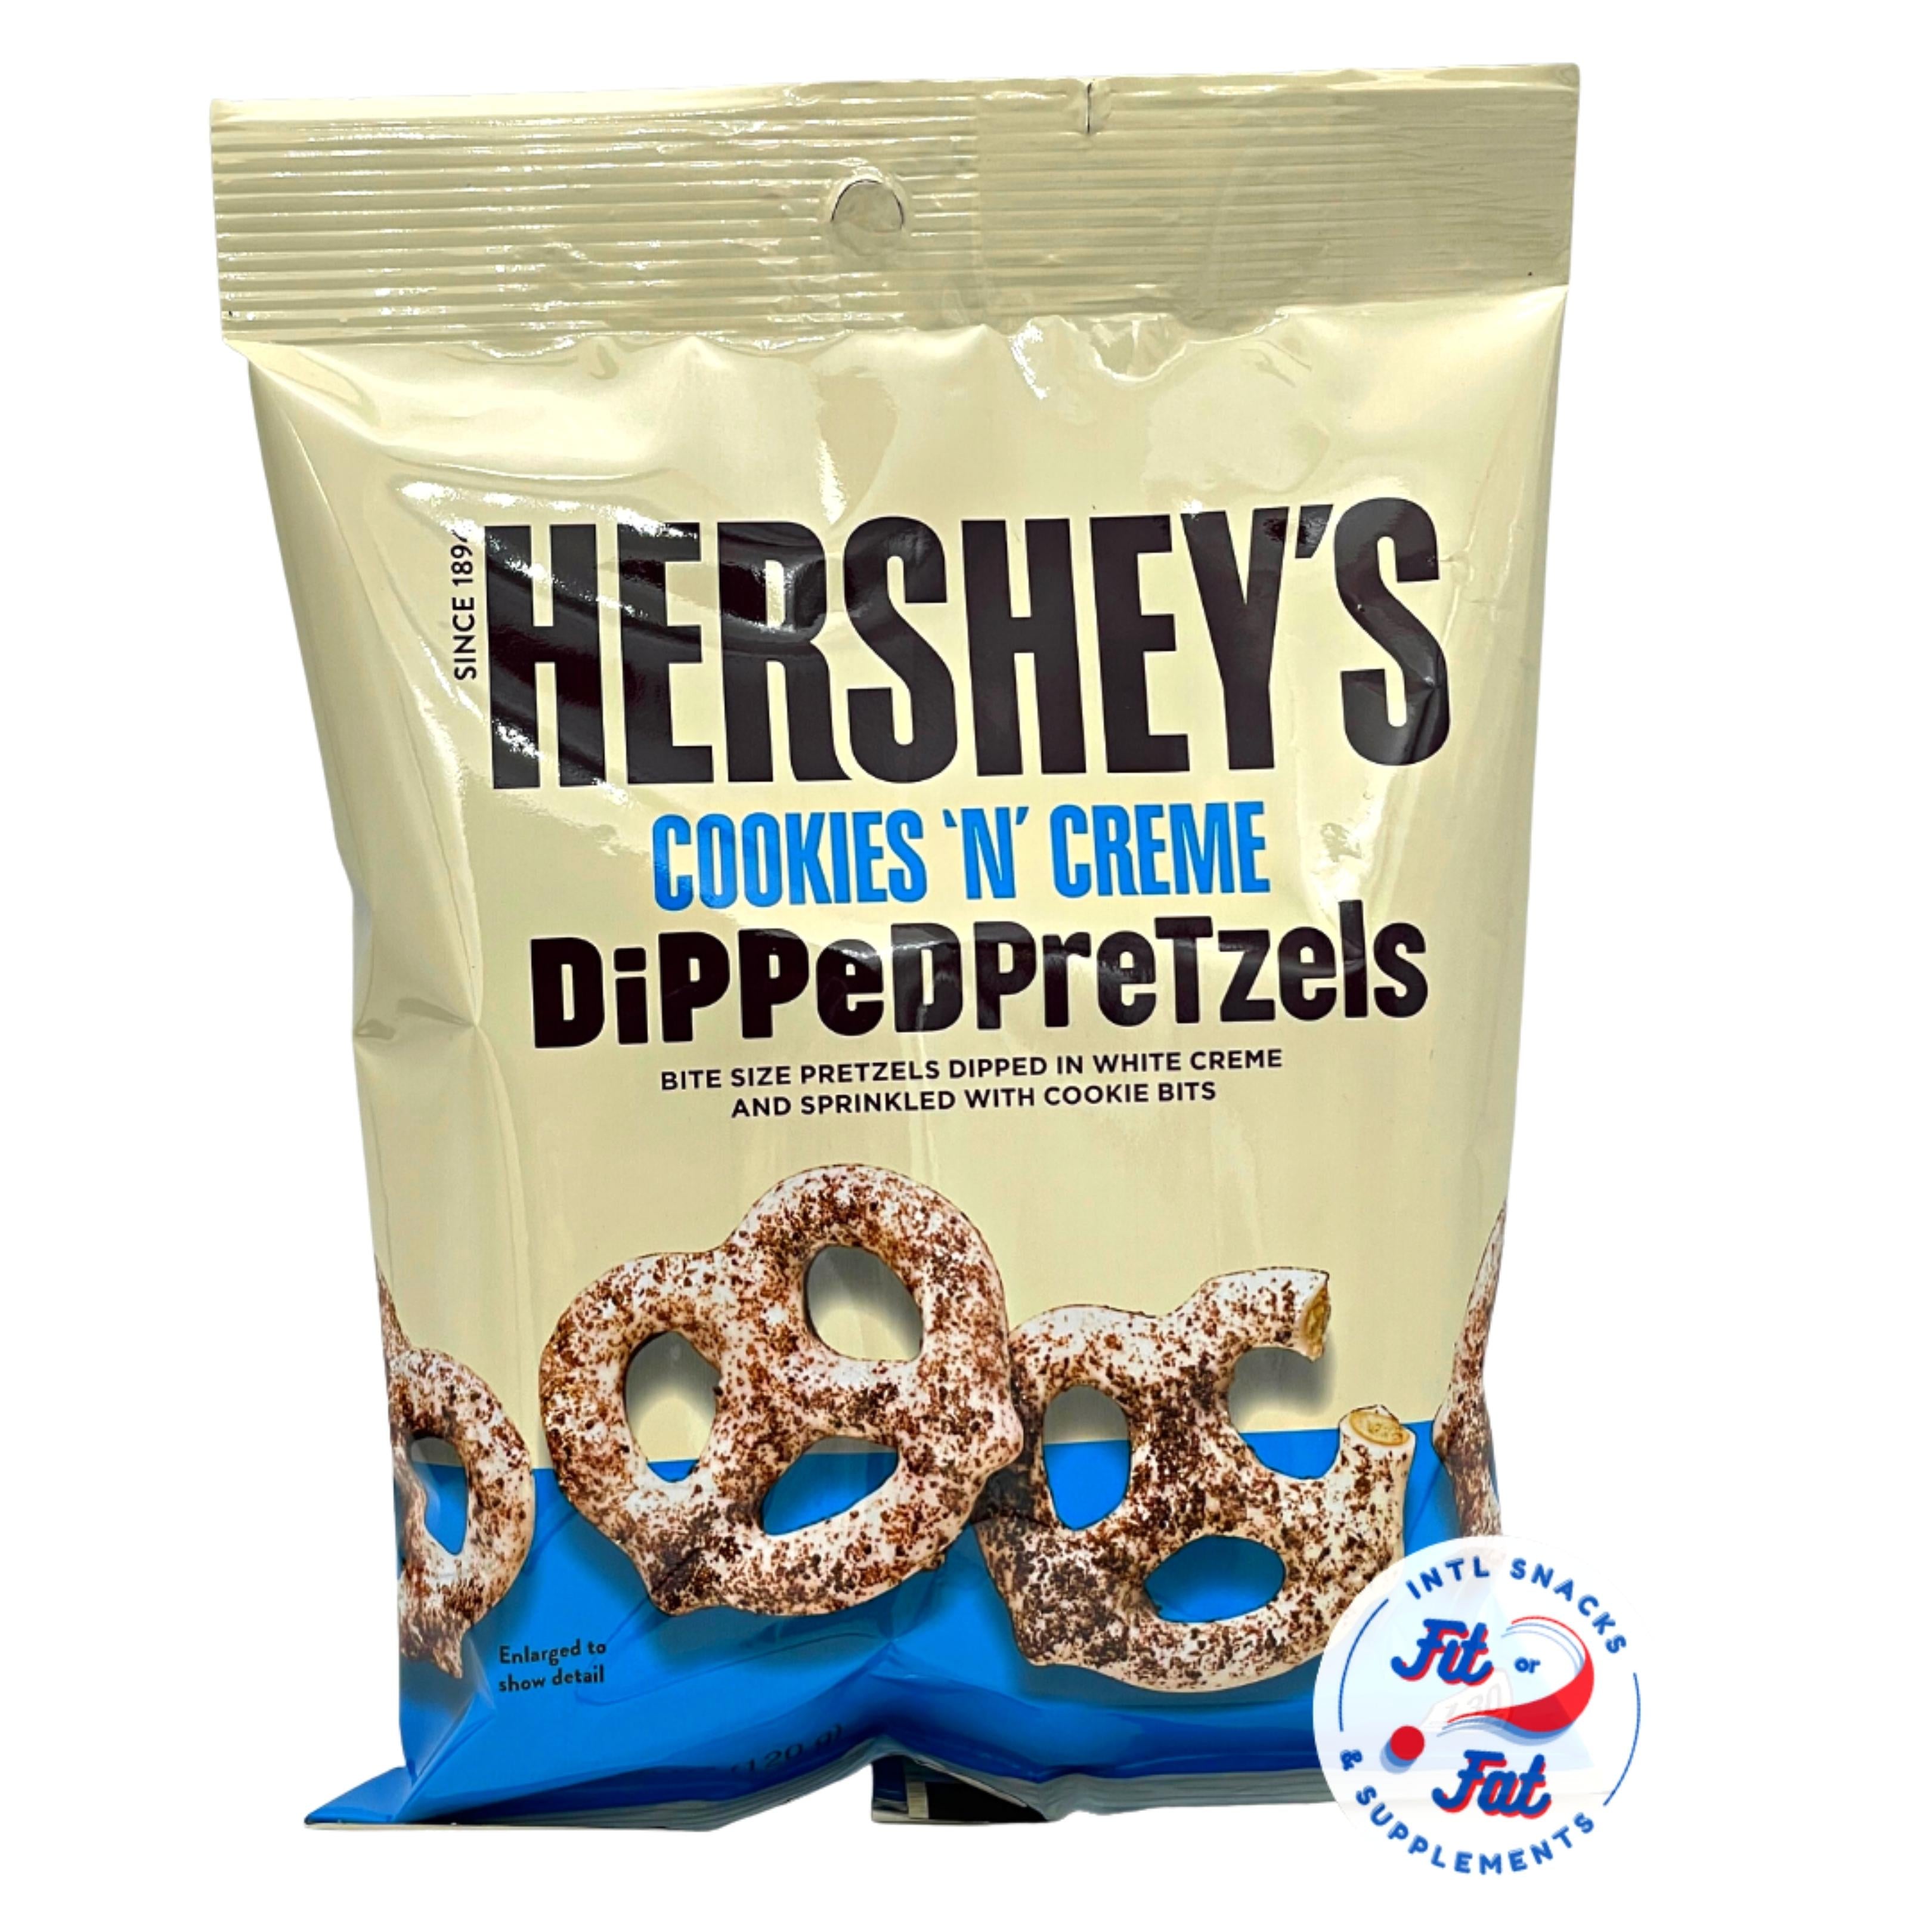 Hershey's - Cookies 'n' Creme Dipped Pretzel / Pretzel ricoperti di Cioccolato Bianco 120g